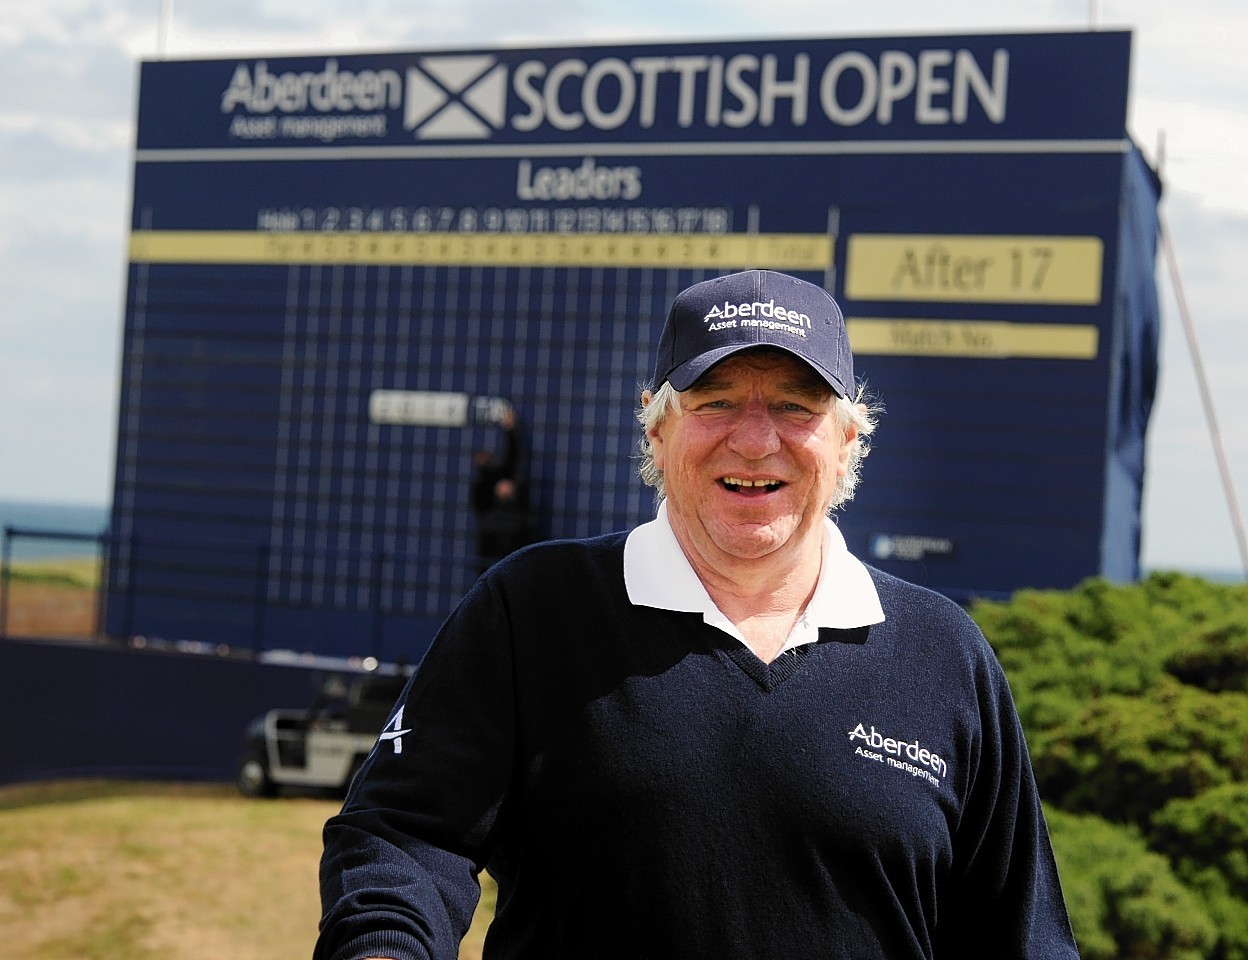 Martin Gilbert at the Scottish Open in Aberdeen